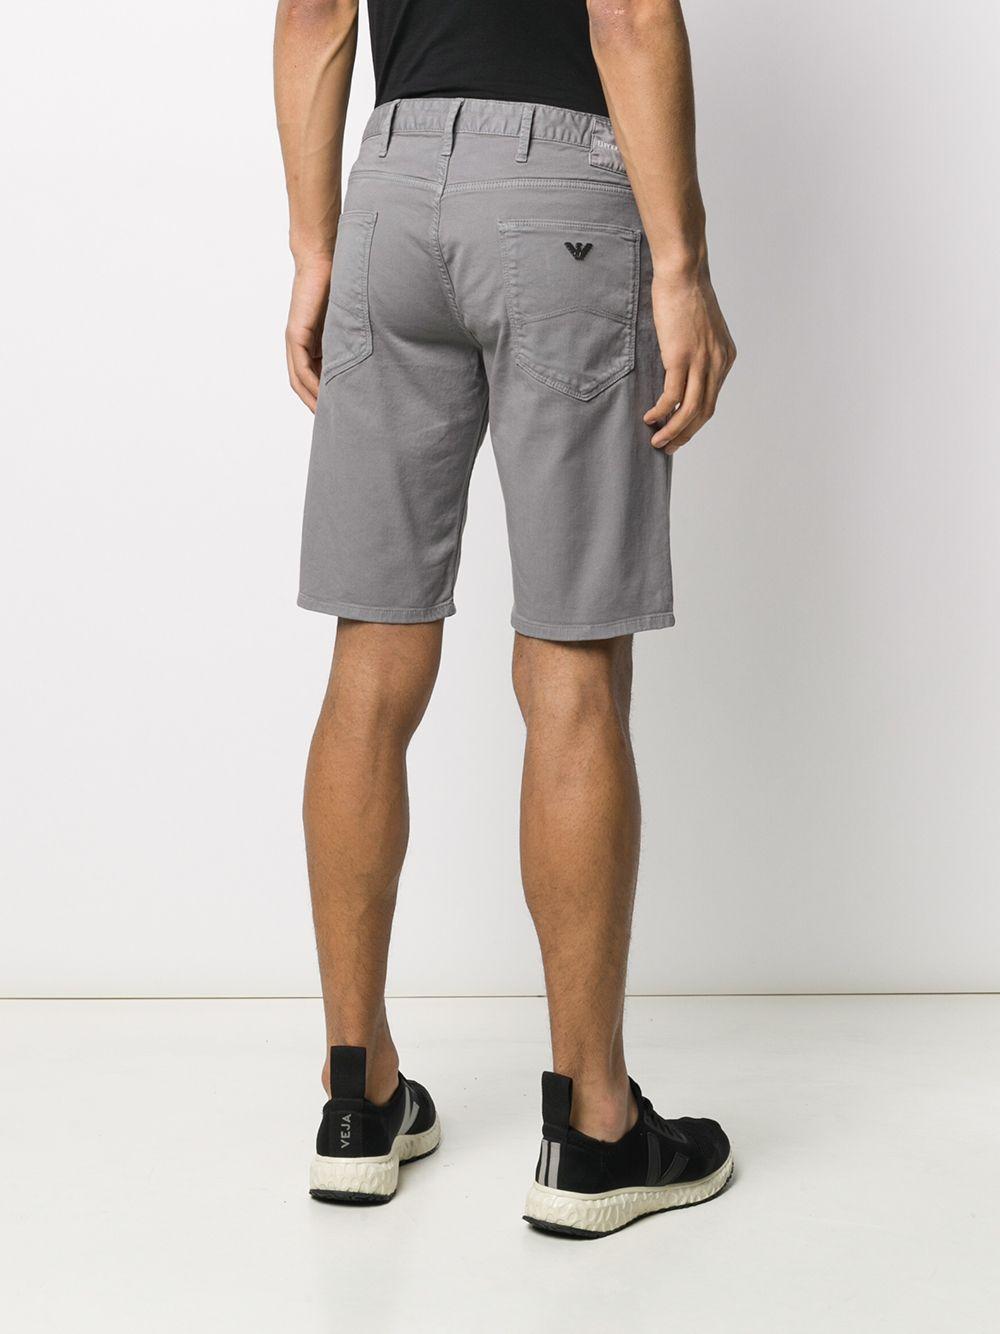 Emporio Armani Denim Bermuda Shorts in Grey (Gray) for Men - Save 35% ...